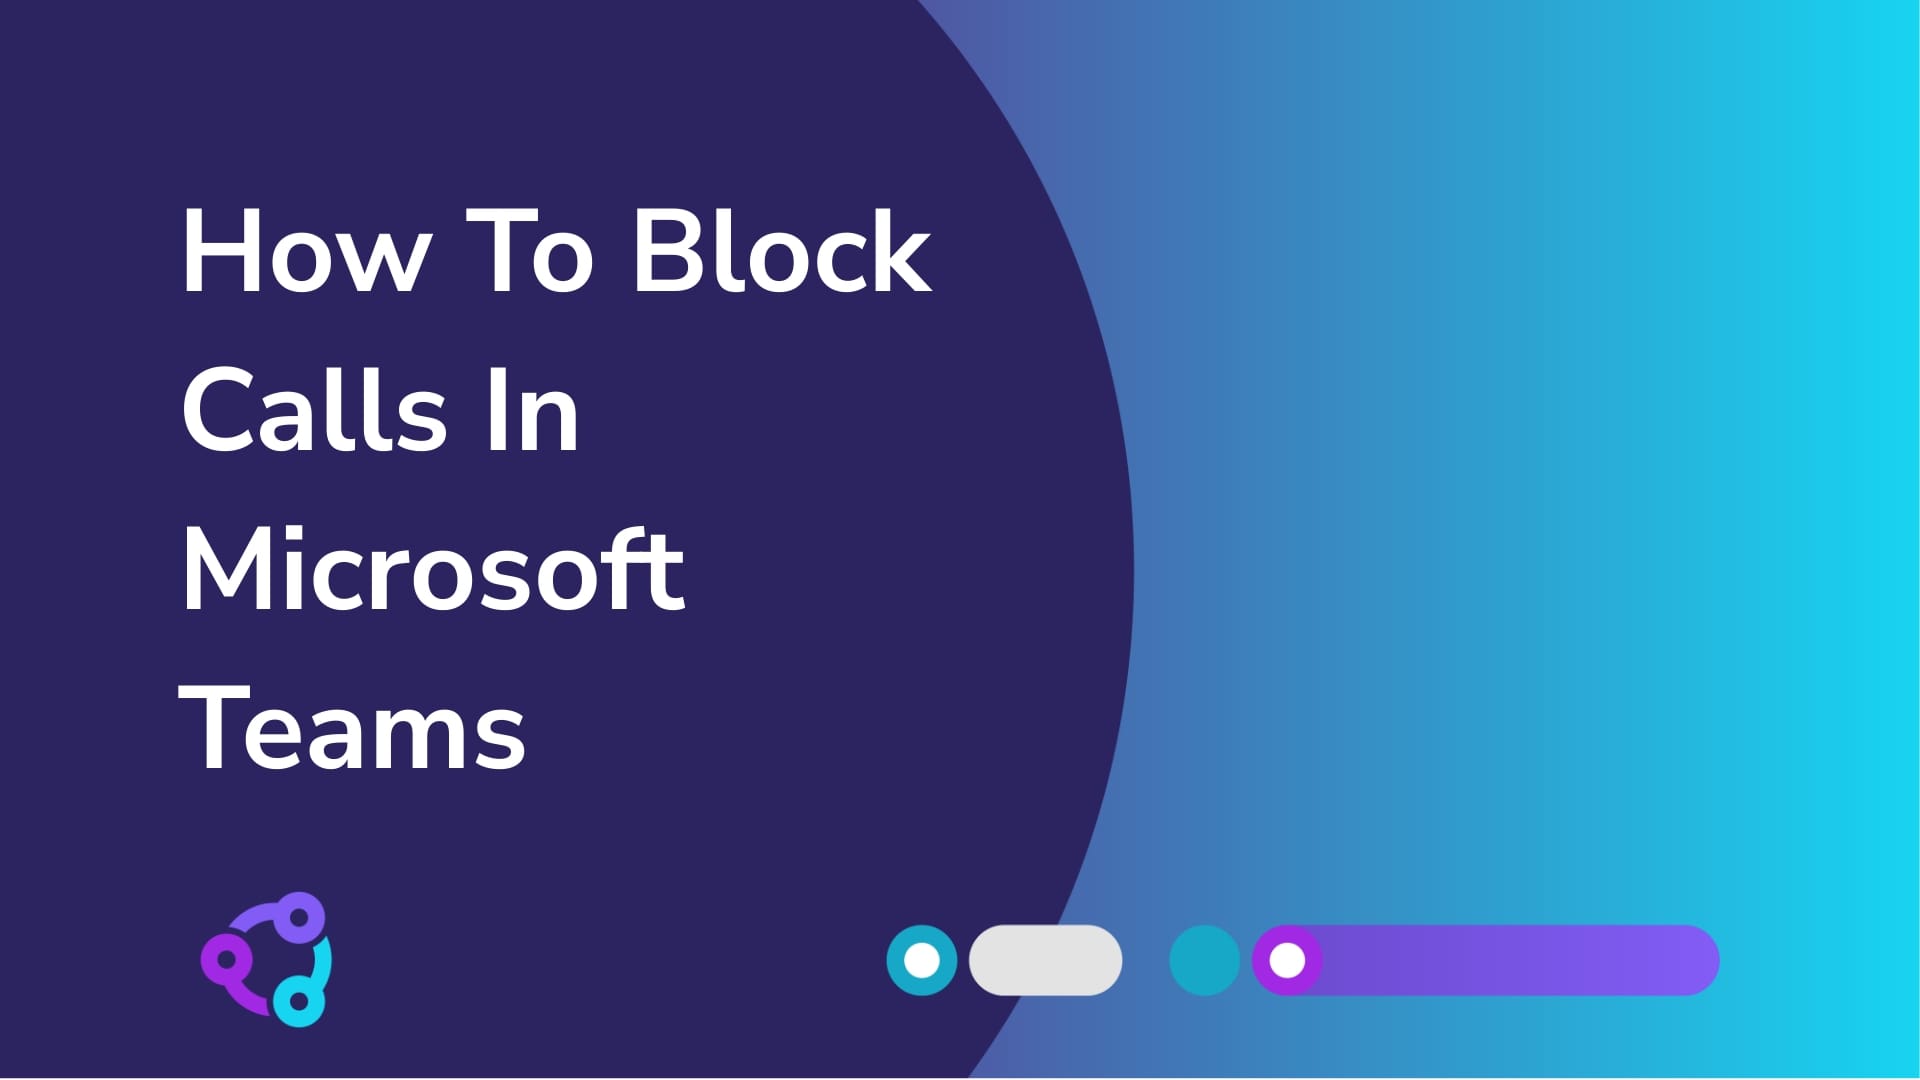 How to block calls in Microsoft Teams